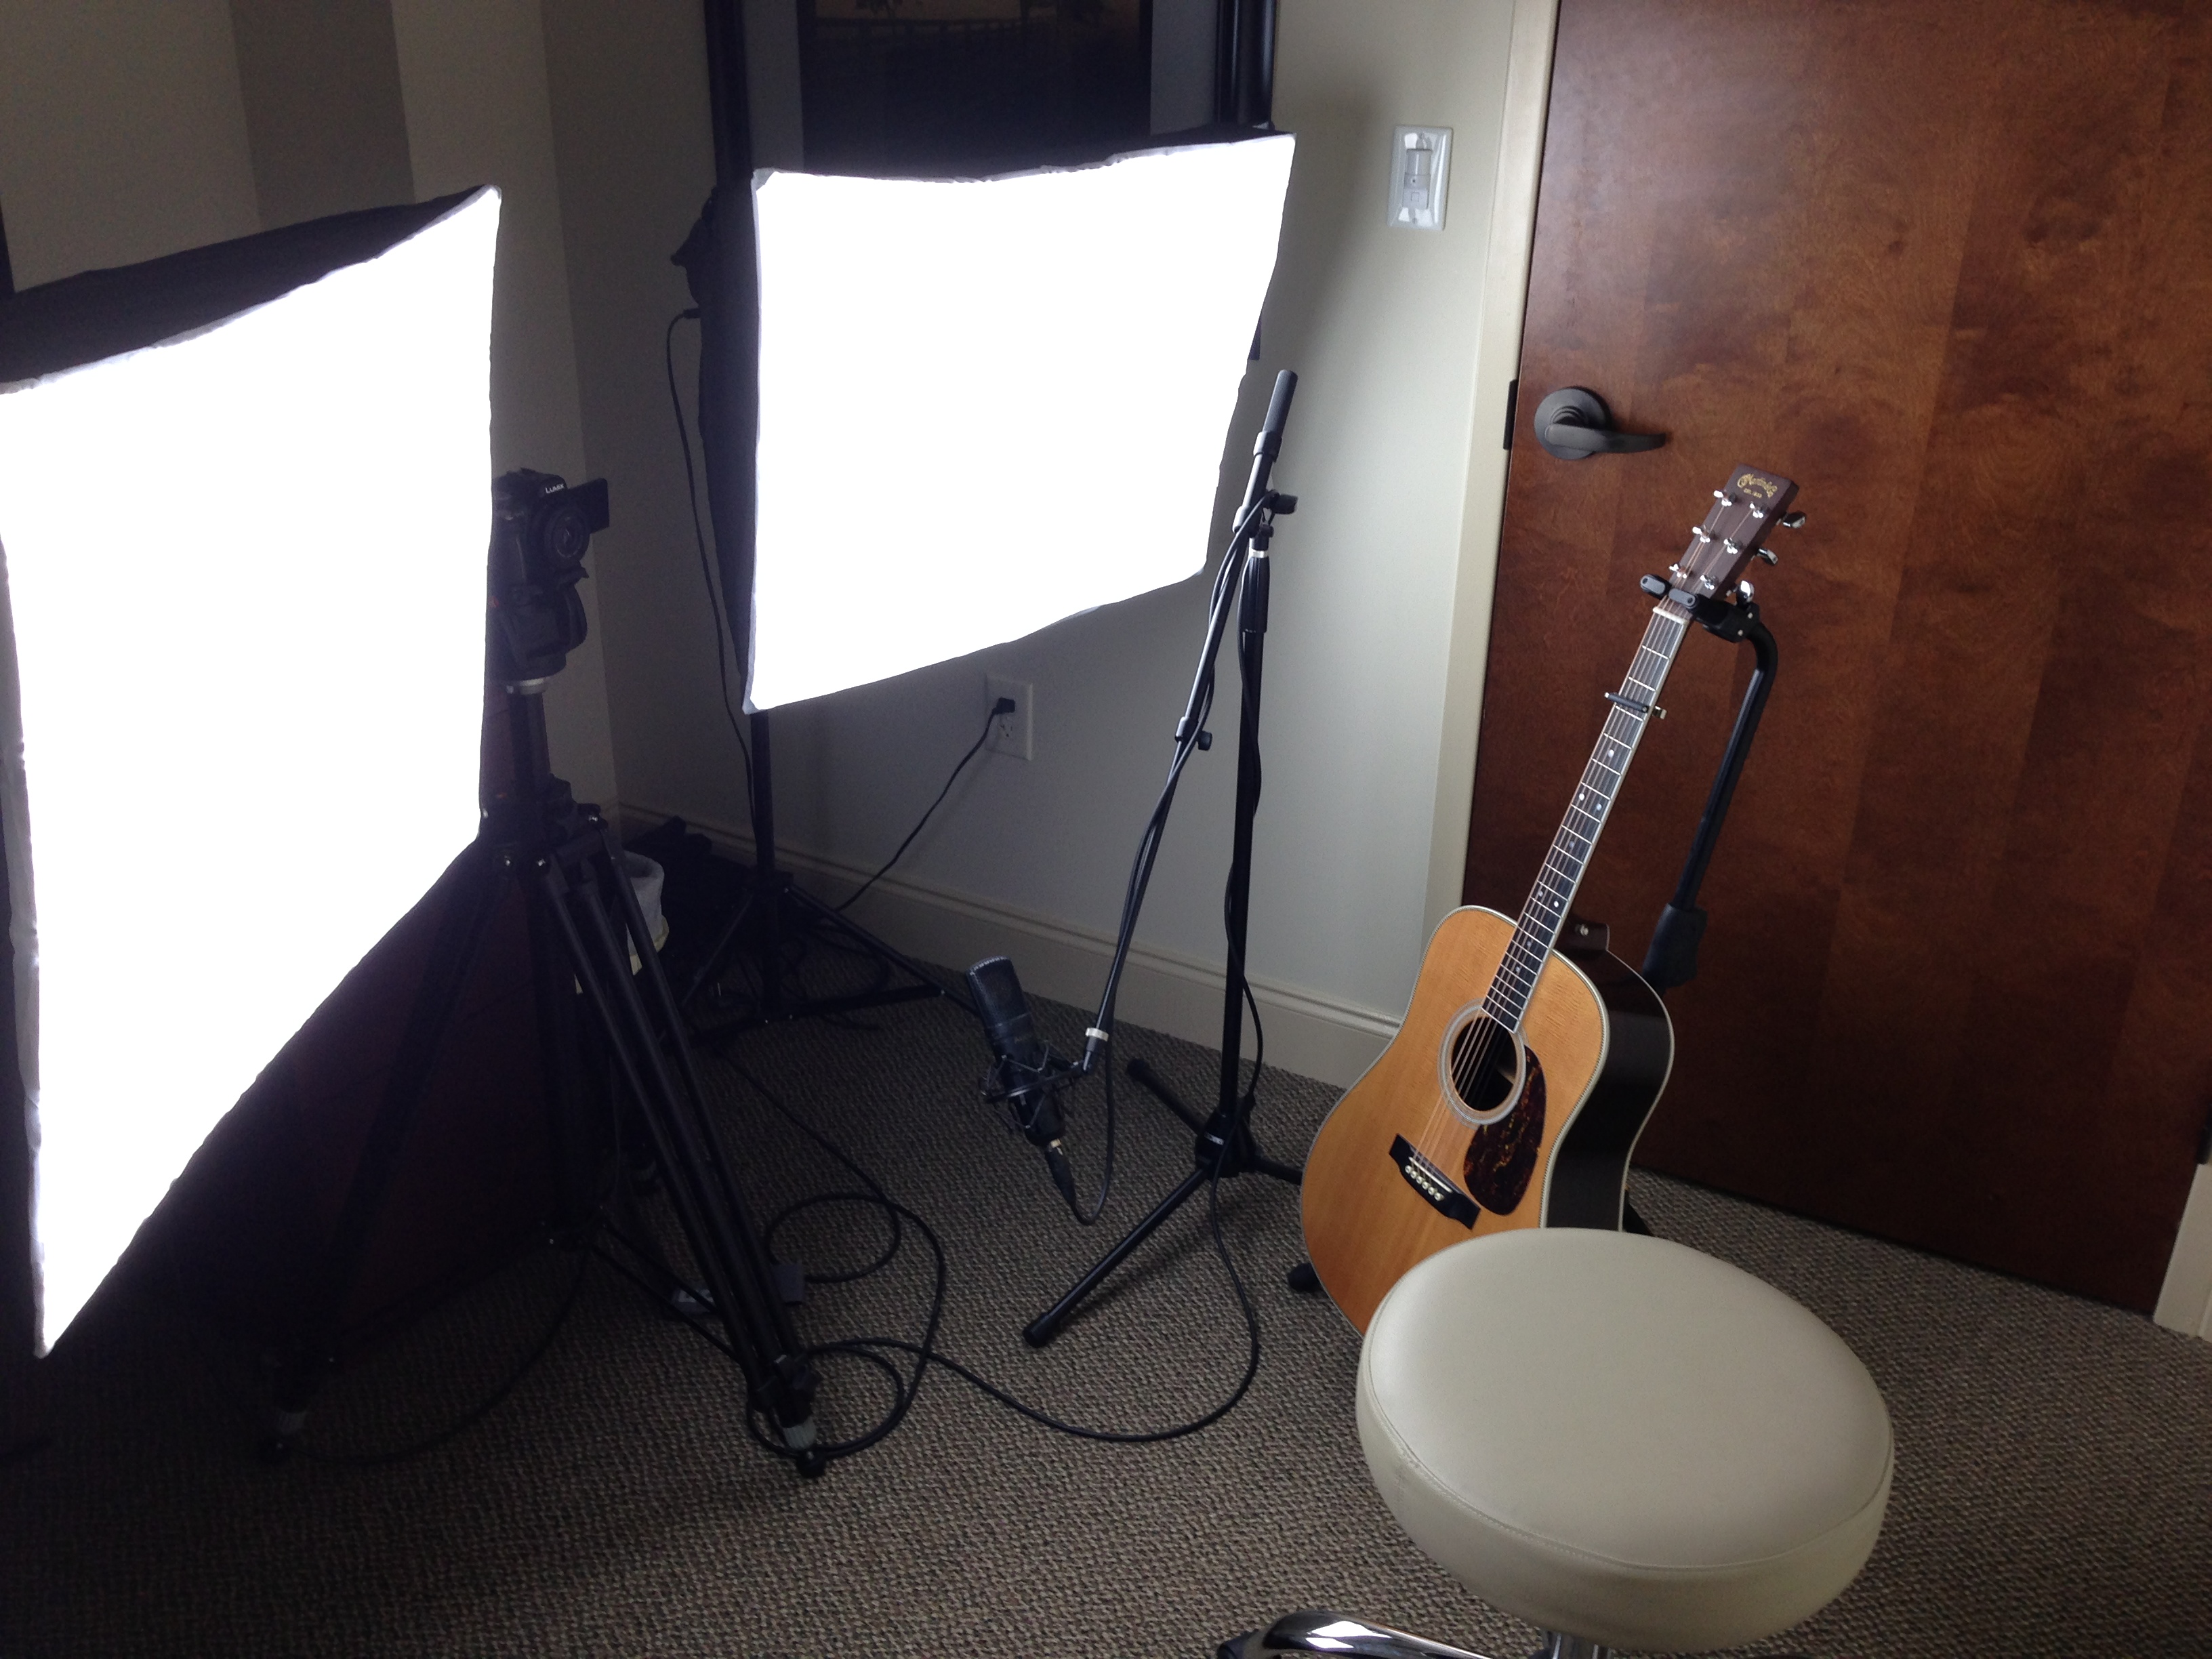 Recording Setup